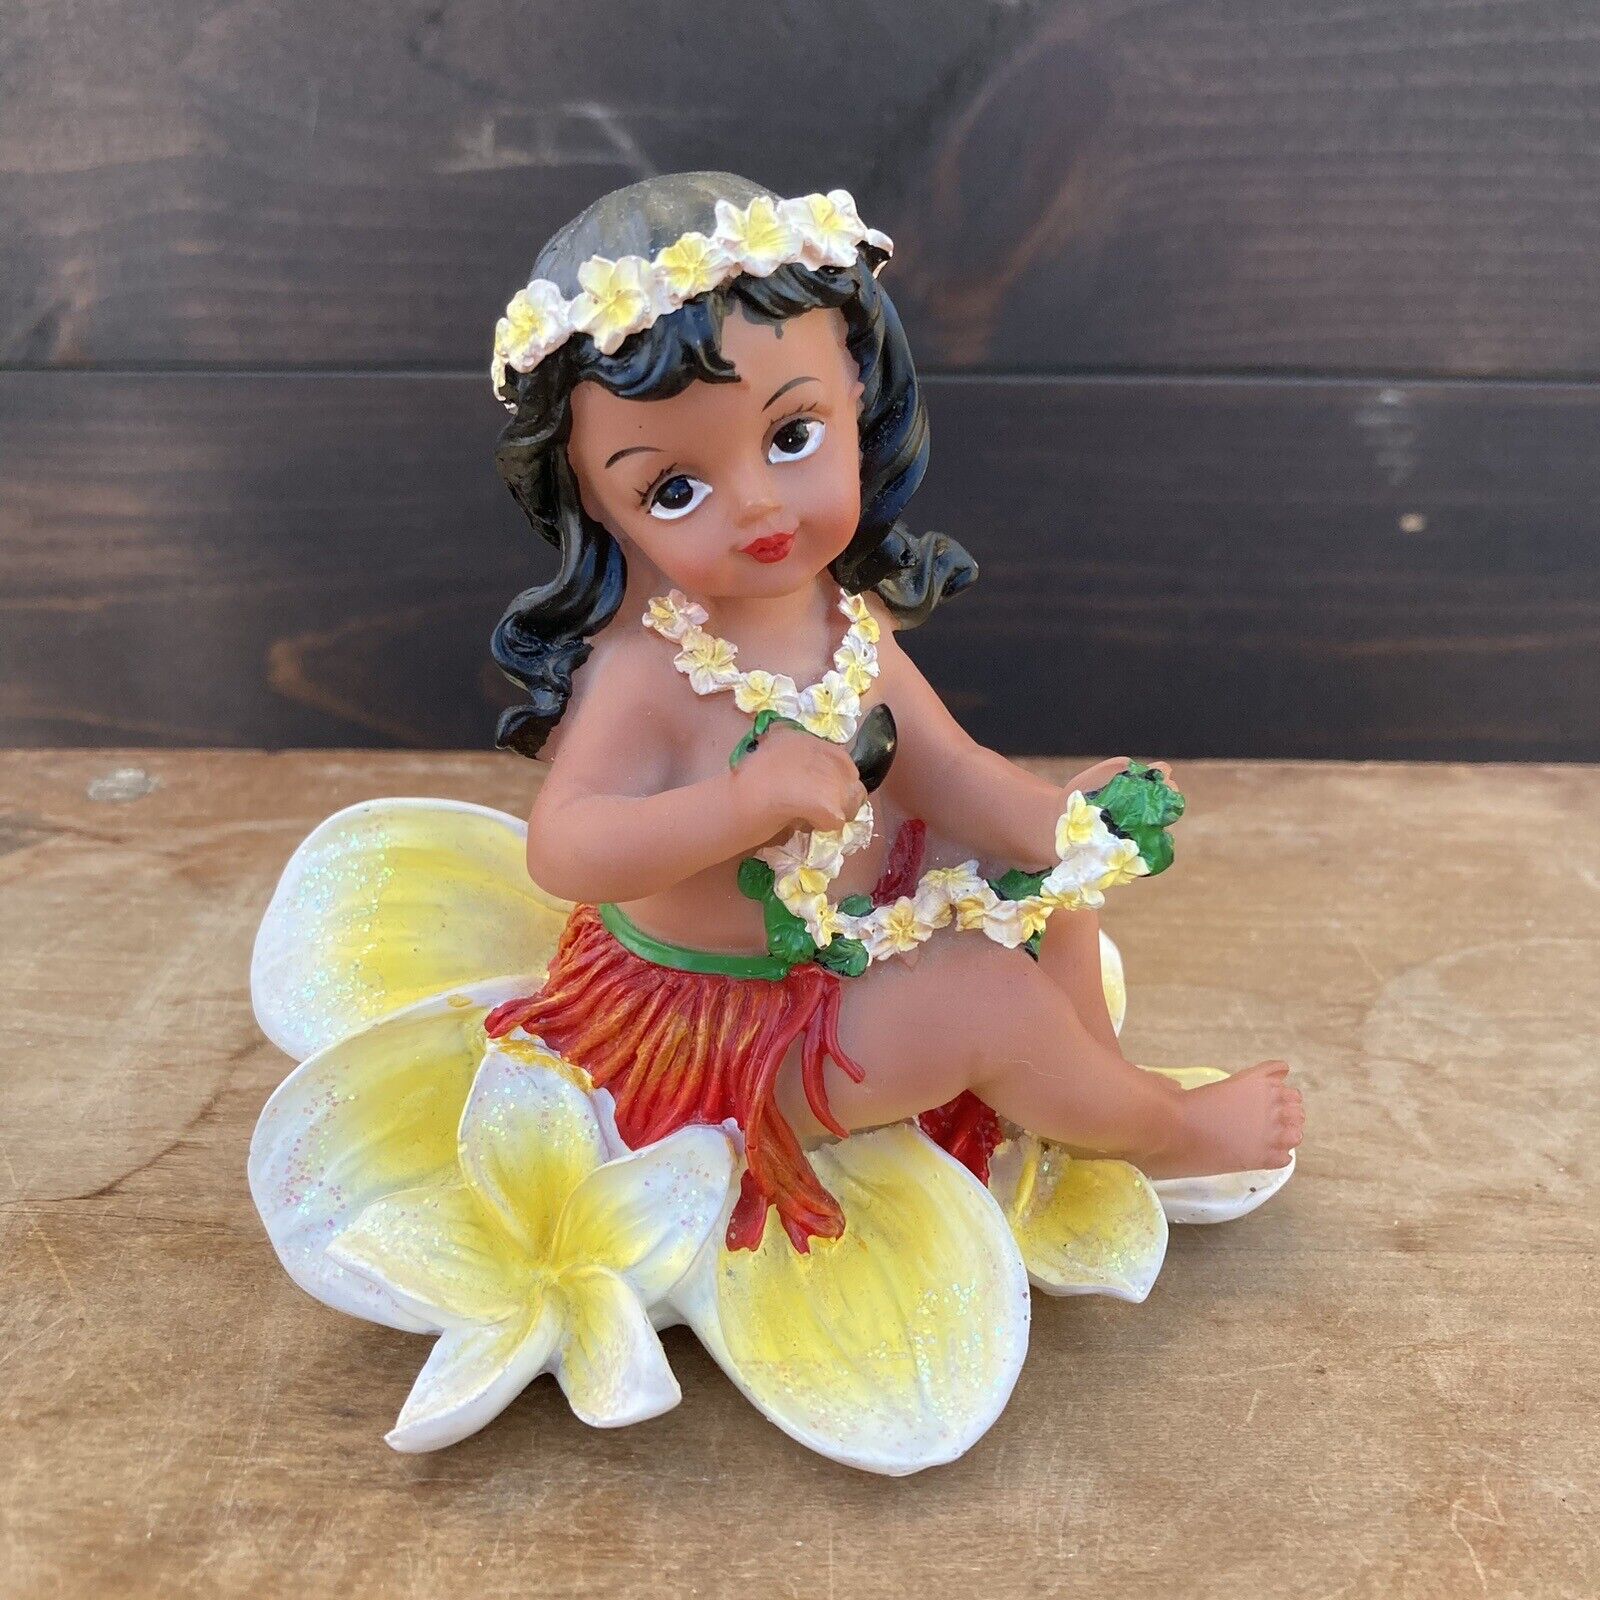 Chiefly co figurine Hula girl hibiscus Luau tiki vintage Hawaiian Mahalo Vintage